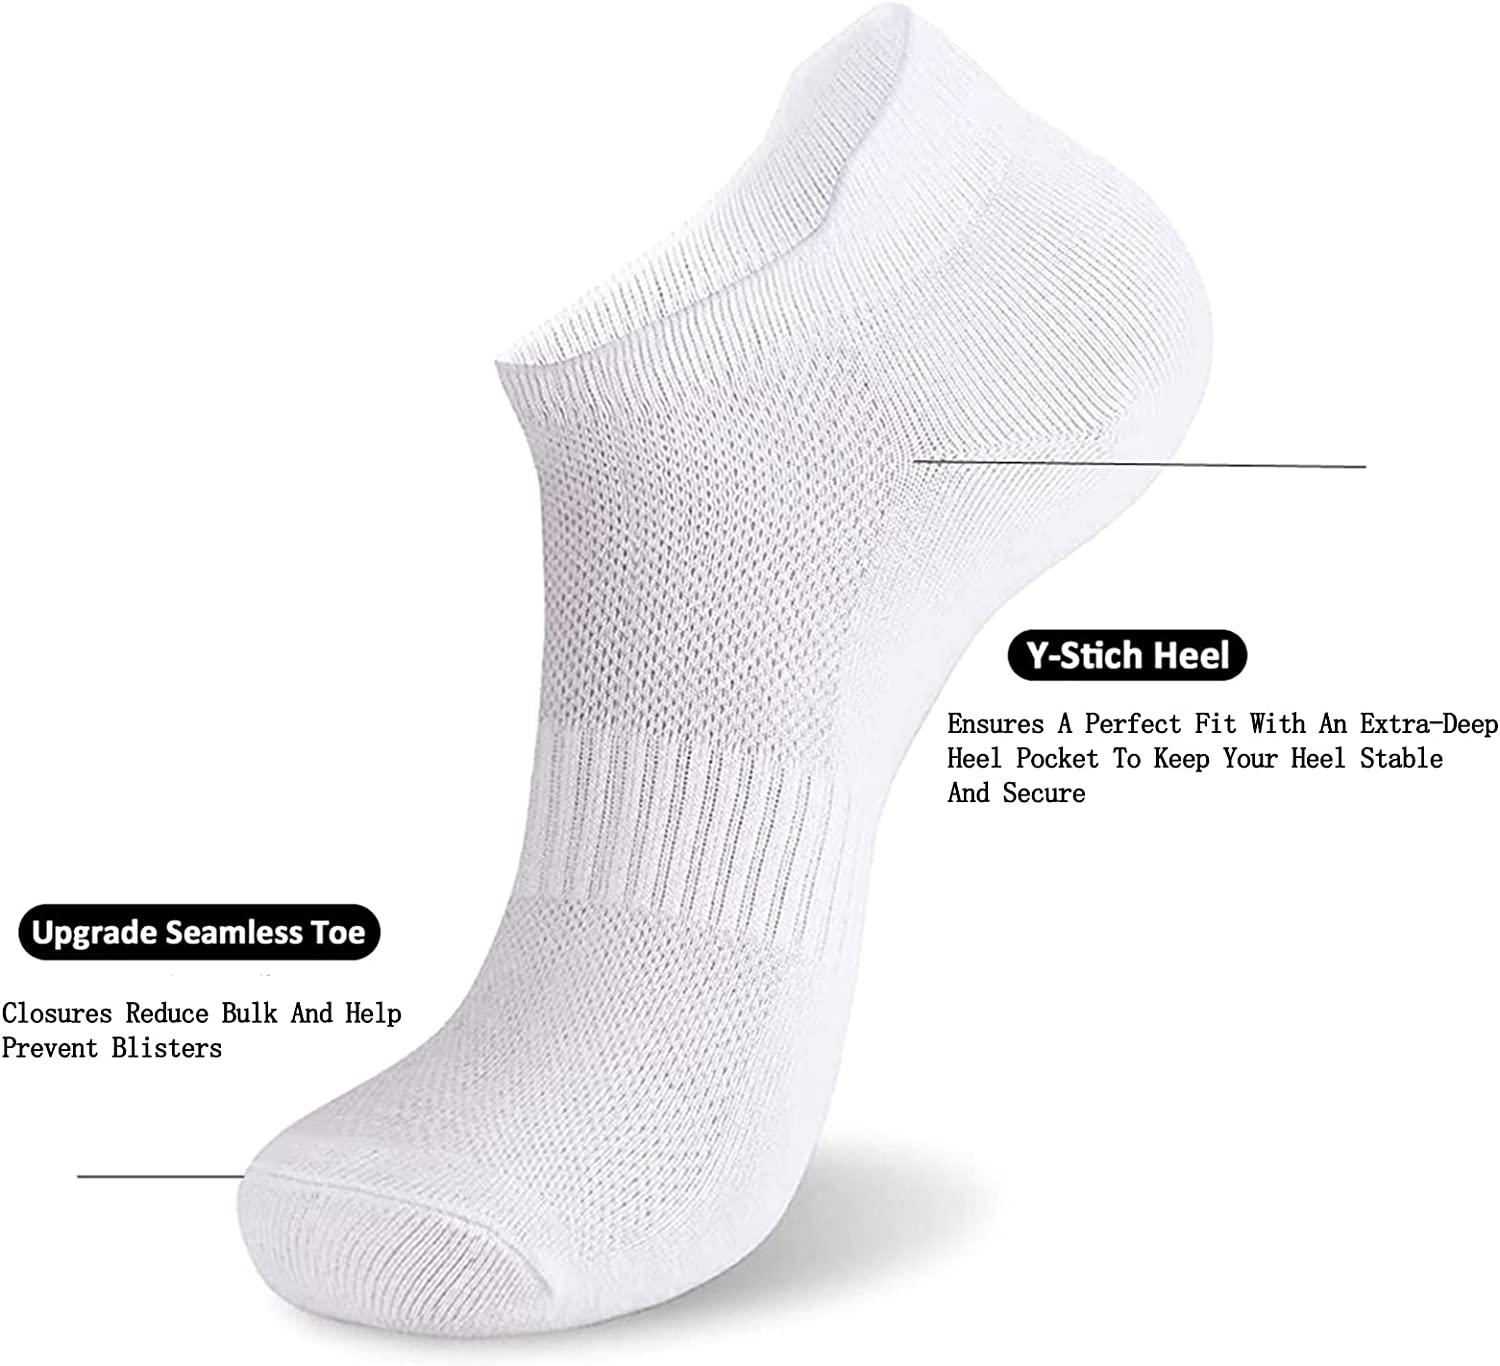 brookhaus Women's Ankle Socks, Athletic Socks Size 6-9/9-11, Low